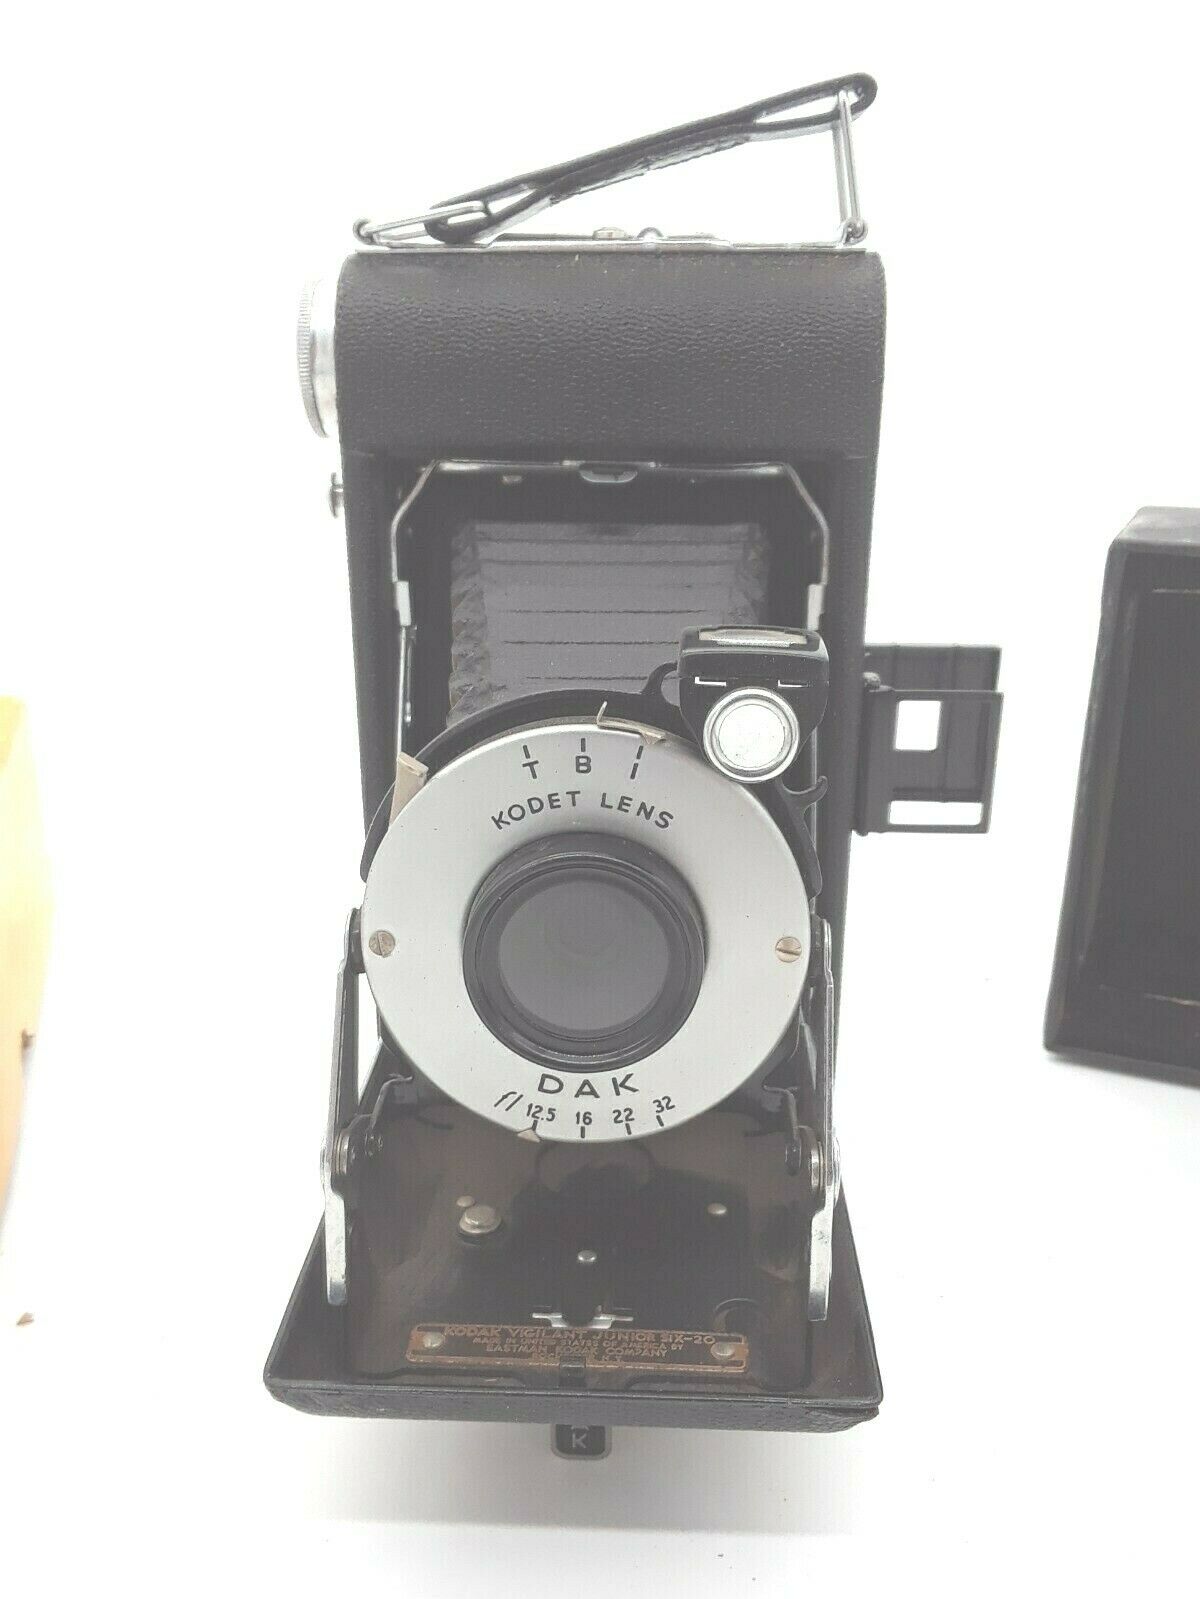 New/unused Kodak Vigilant Folding Camera #6-20 W/ Kodet Lens & Dak Shutter. Read